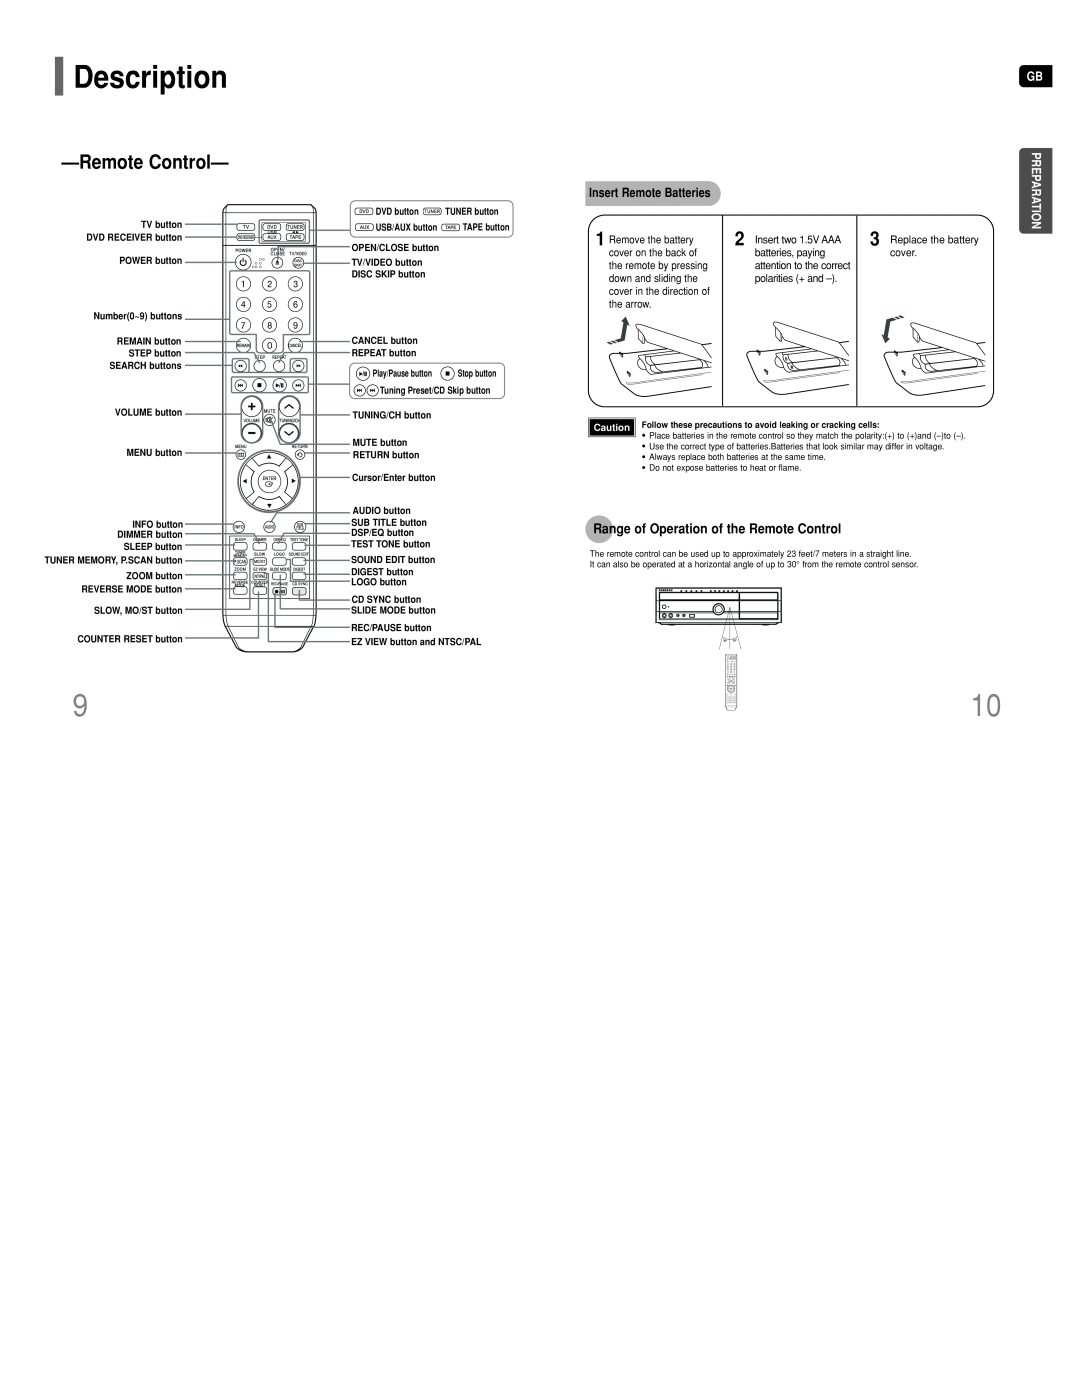 Samsung HT-DT79 RemoteControl, Range of Operation of the Remote Control, Description, Insert Remote Batteries, Preparation 